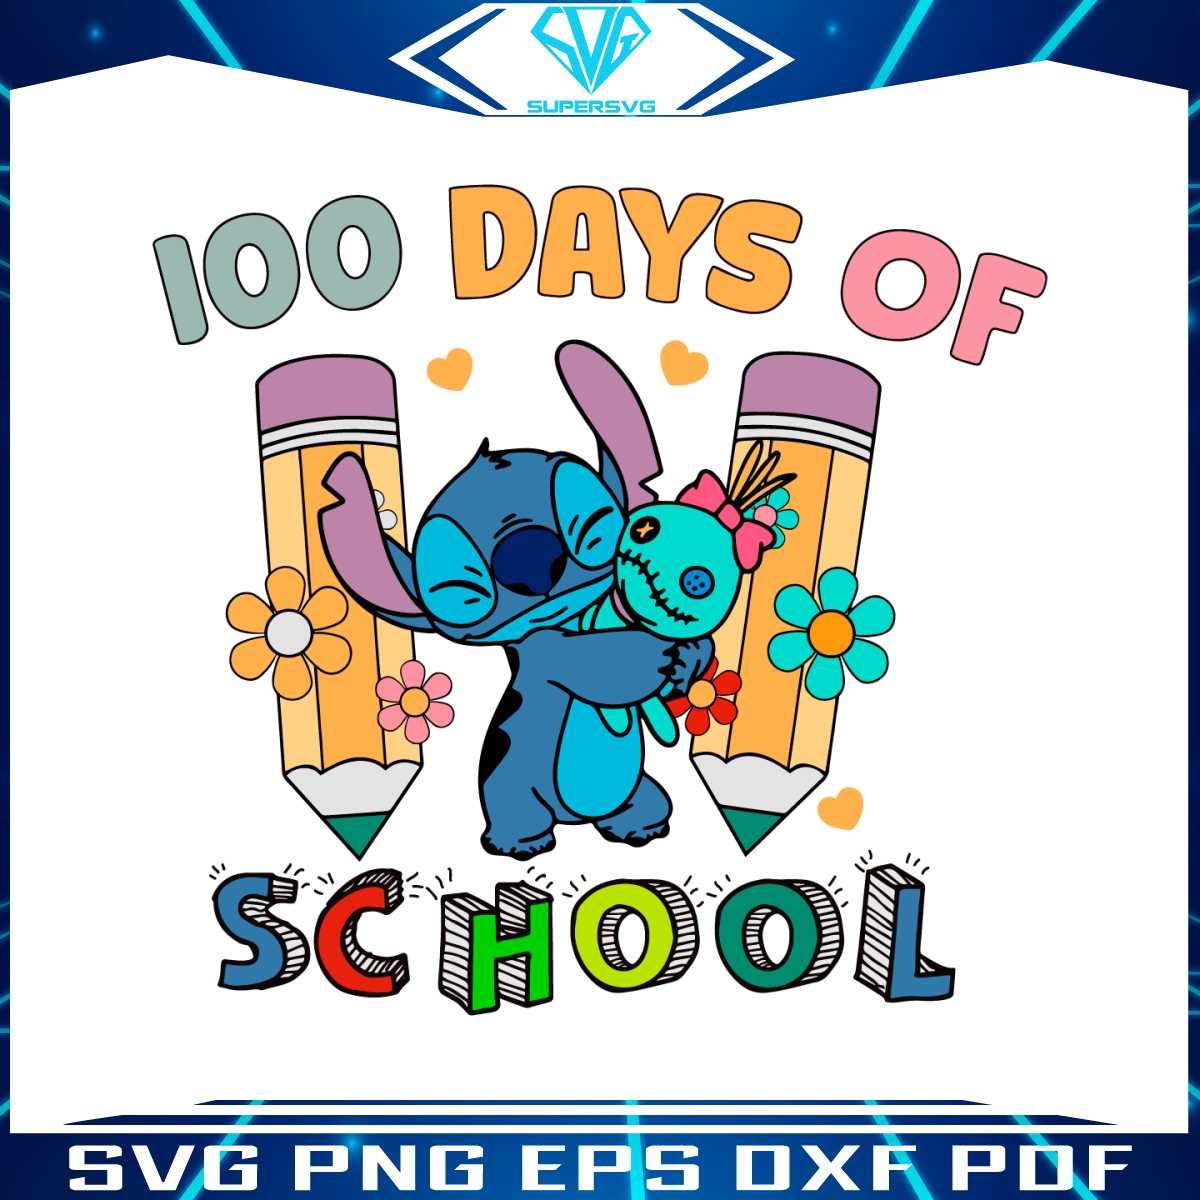 cute-stitch-100-days-of-school-svg